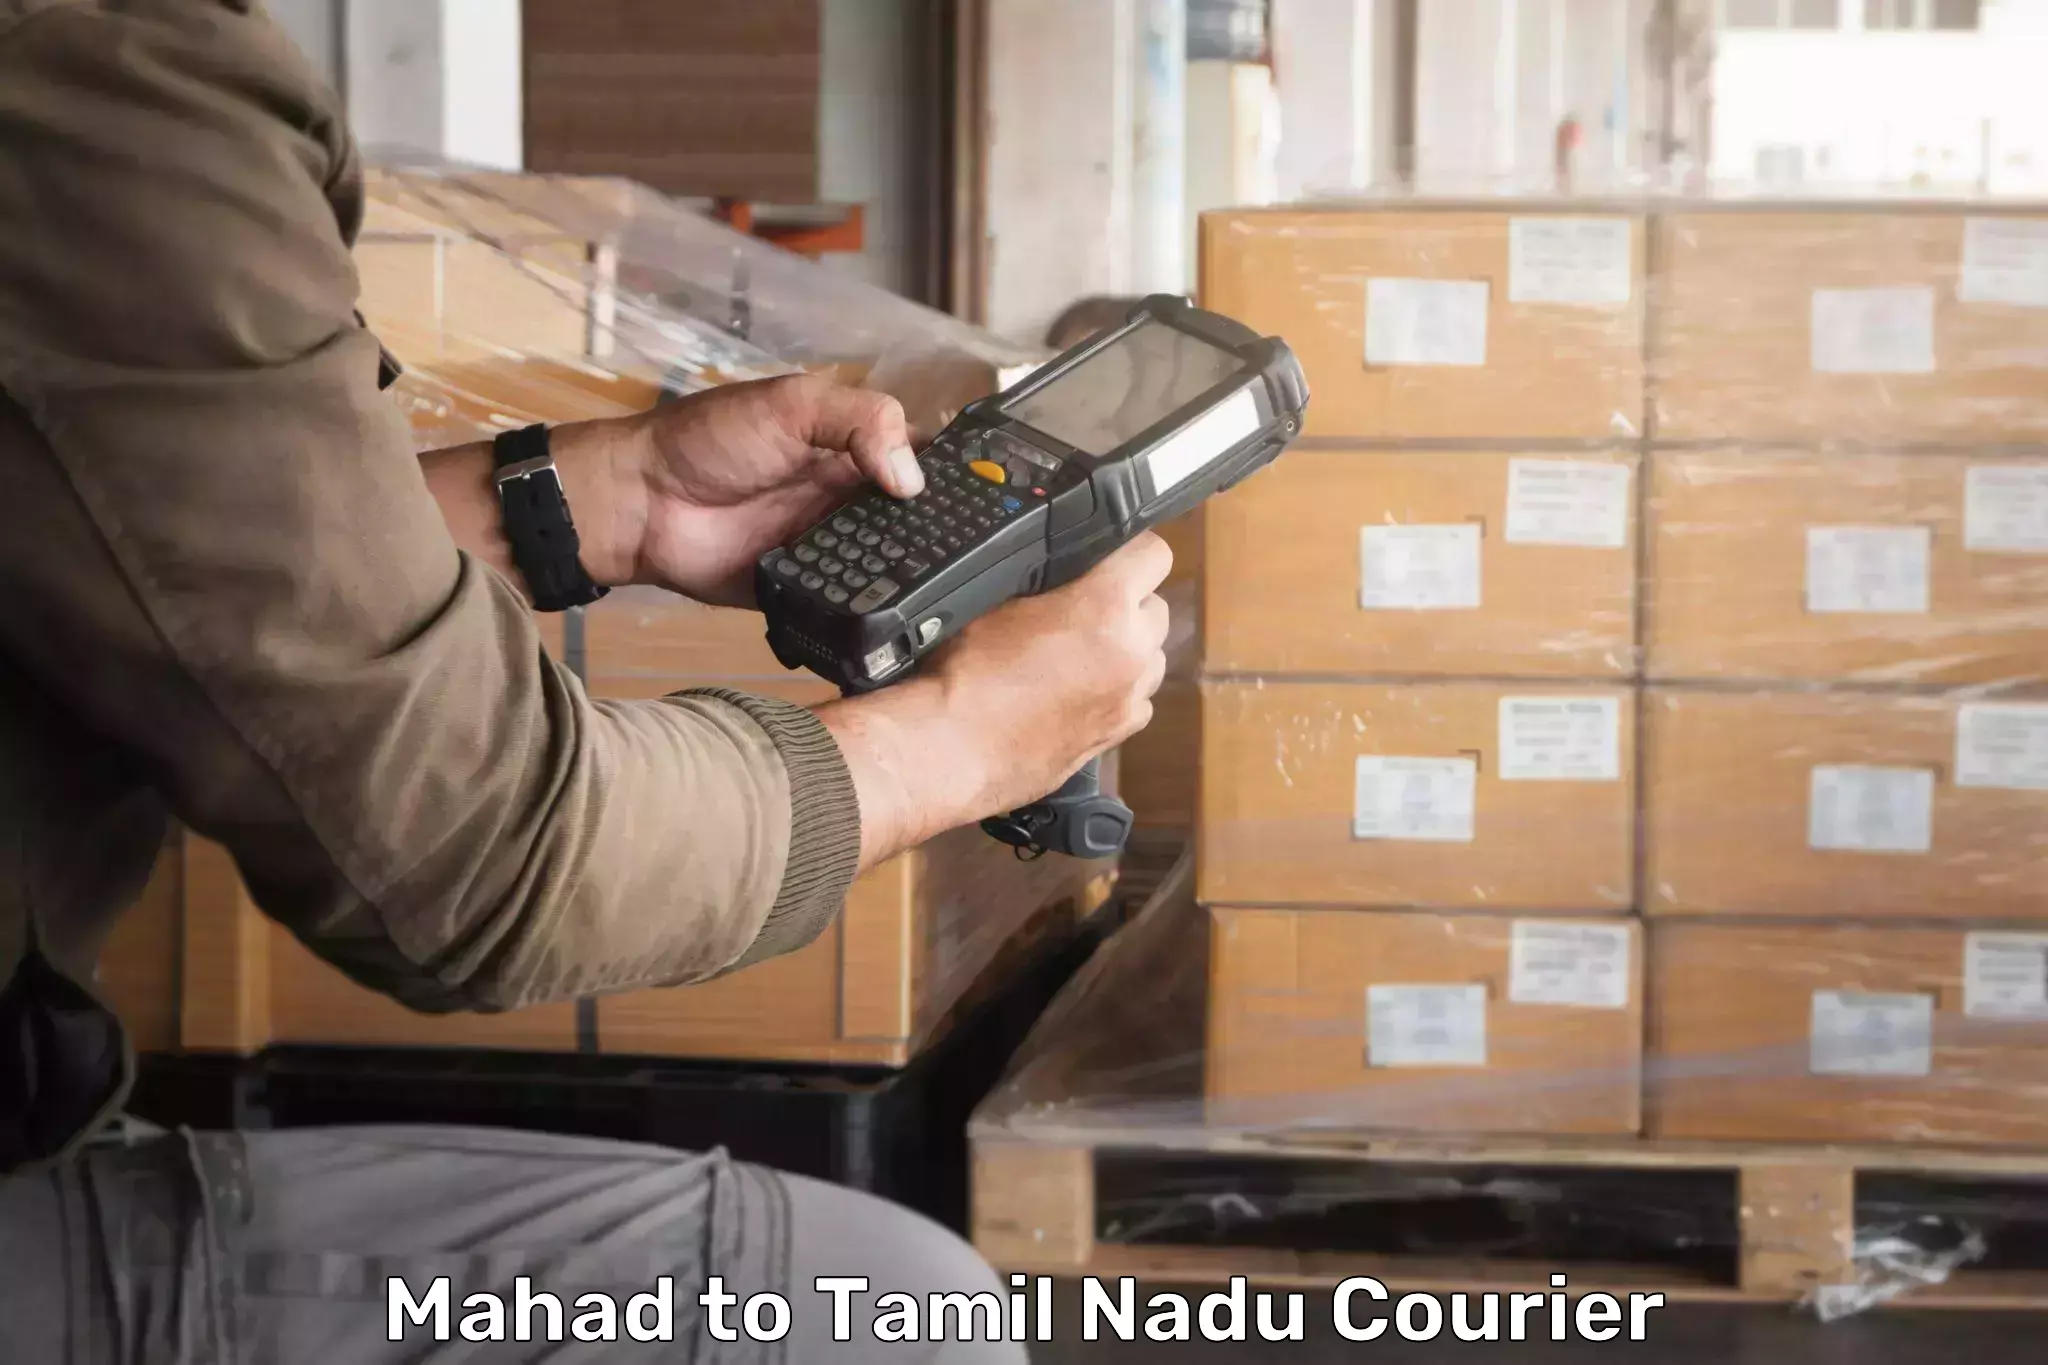 Customer-centric shipping Mahad to Tamil Nadu